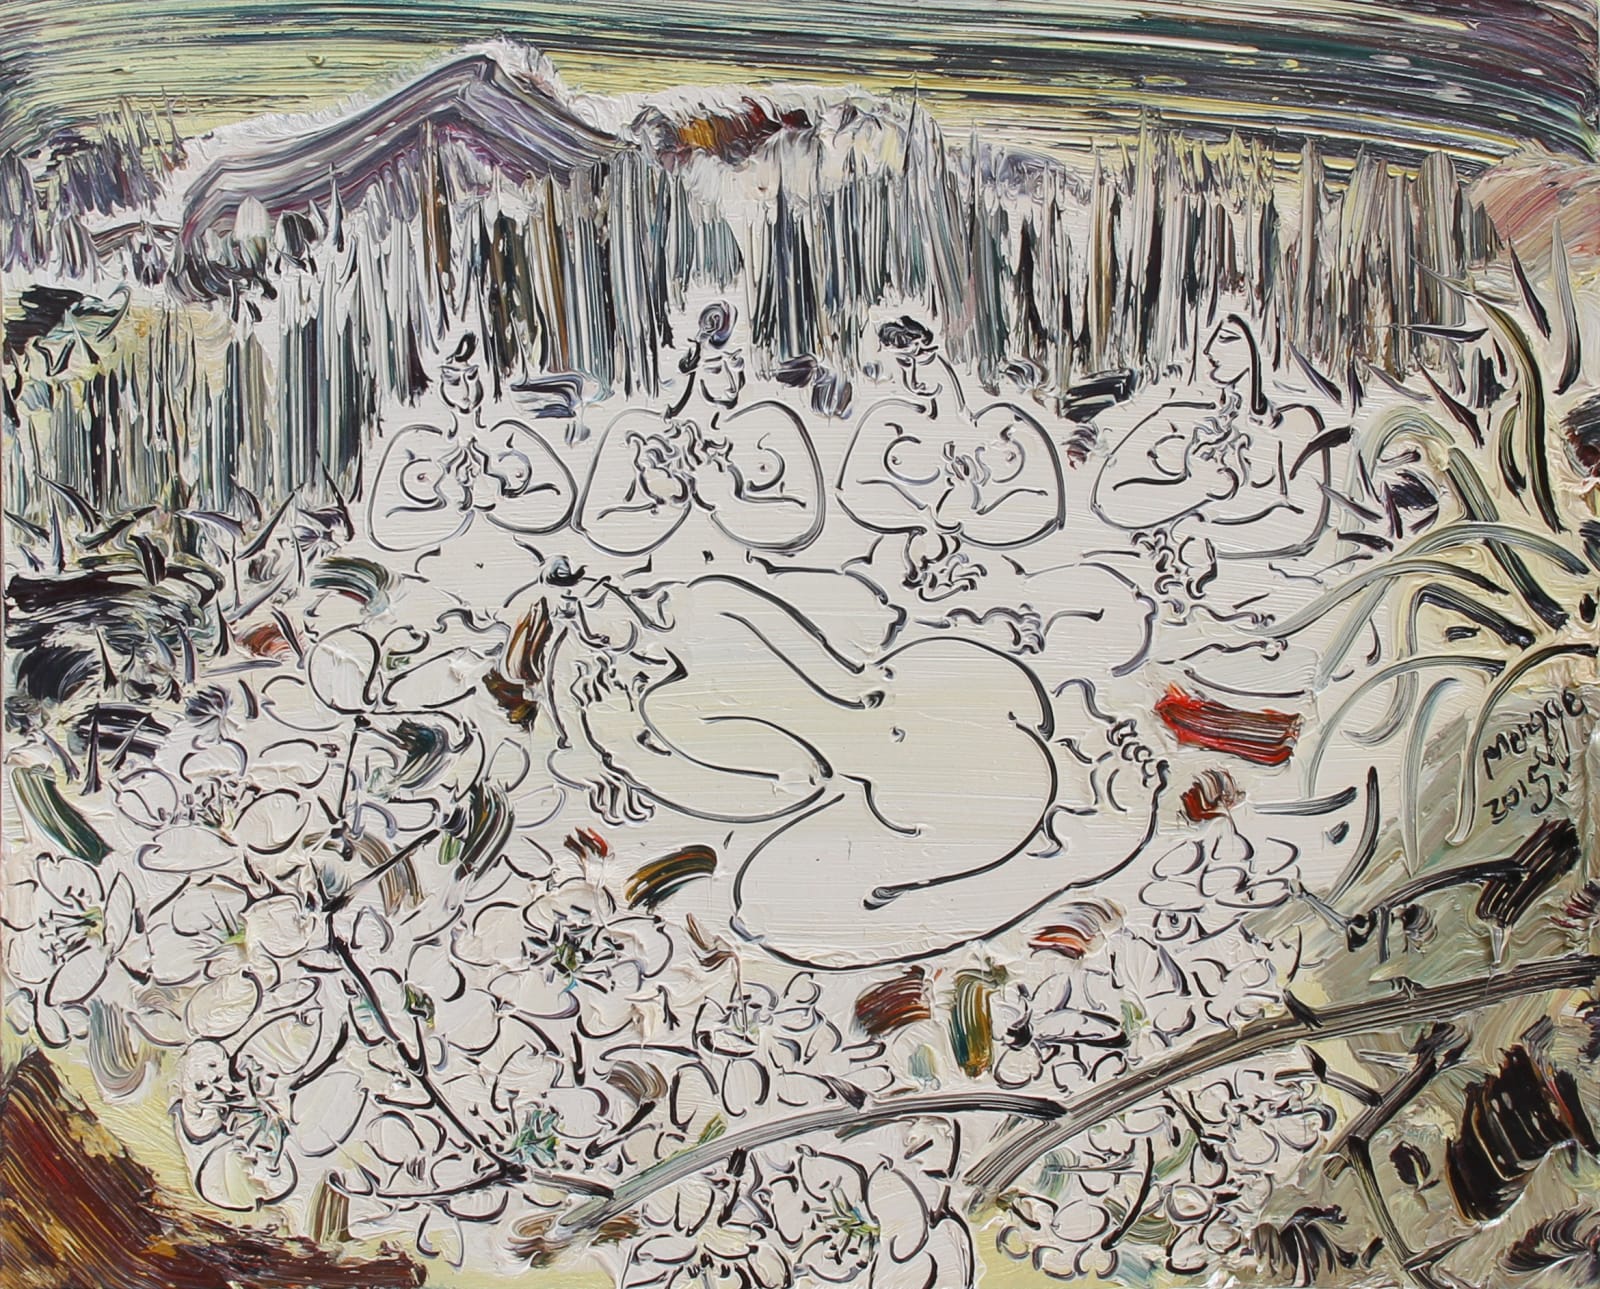 Zhao Mengge 赵梦歌, Untitled #16, 2015